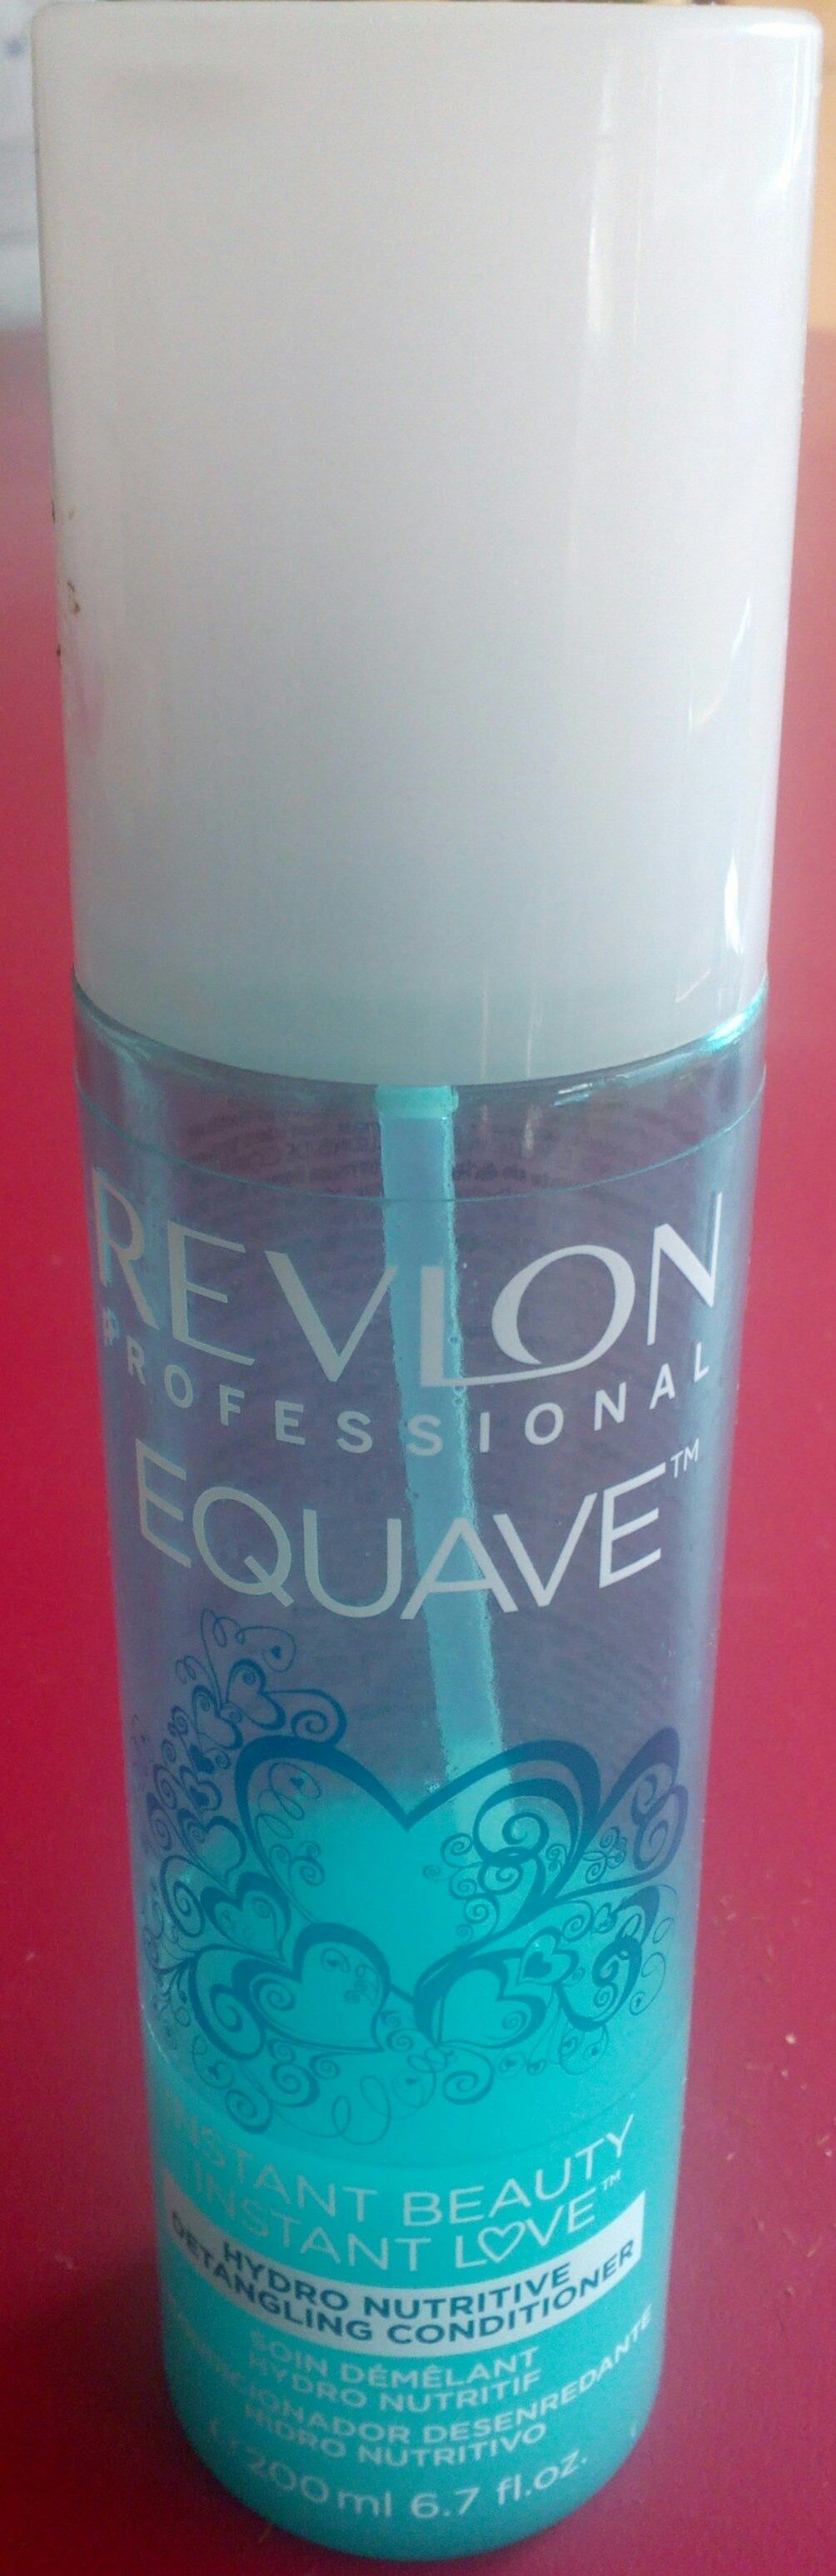 Revlon professional equave Hydro nutritive detangling conditioner soin démêlant hydro nutritif - Product - en